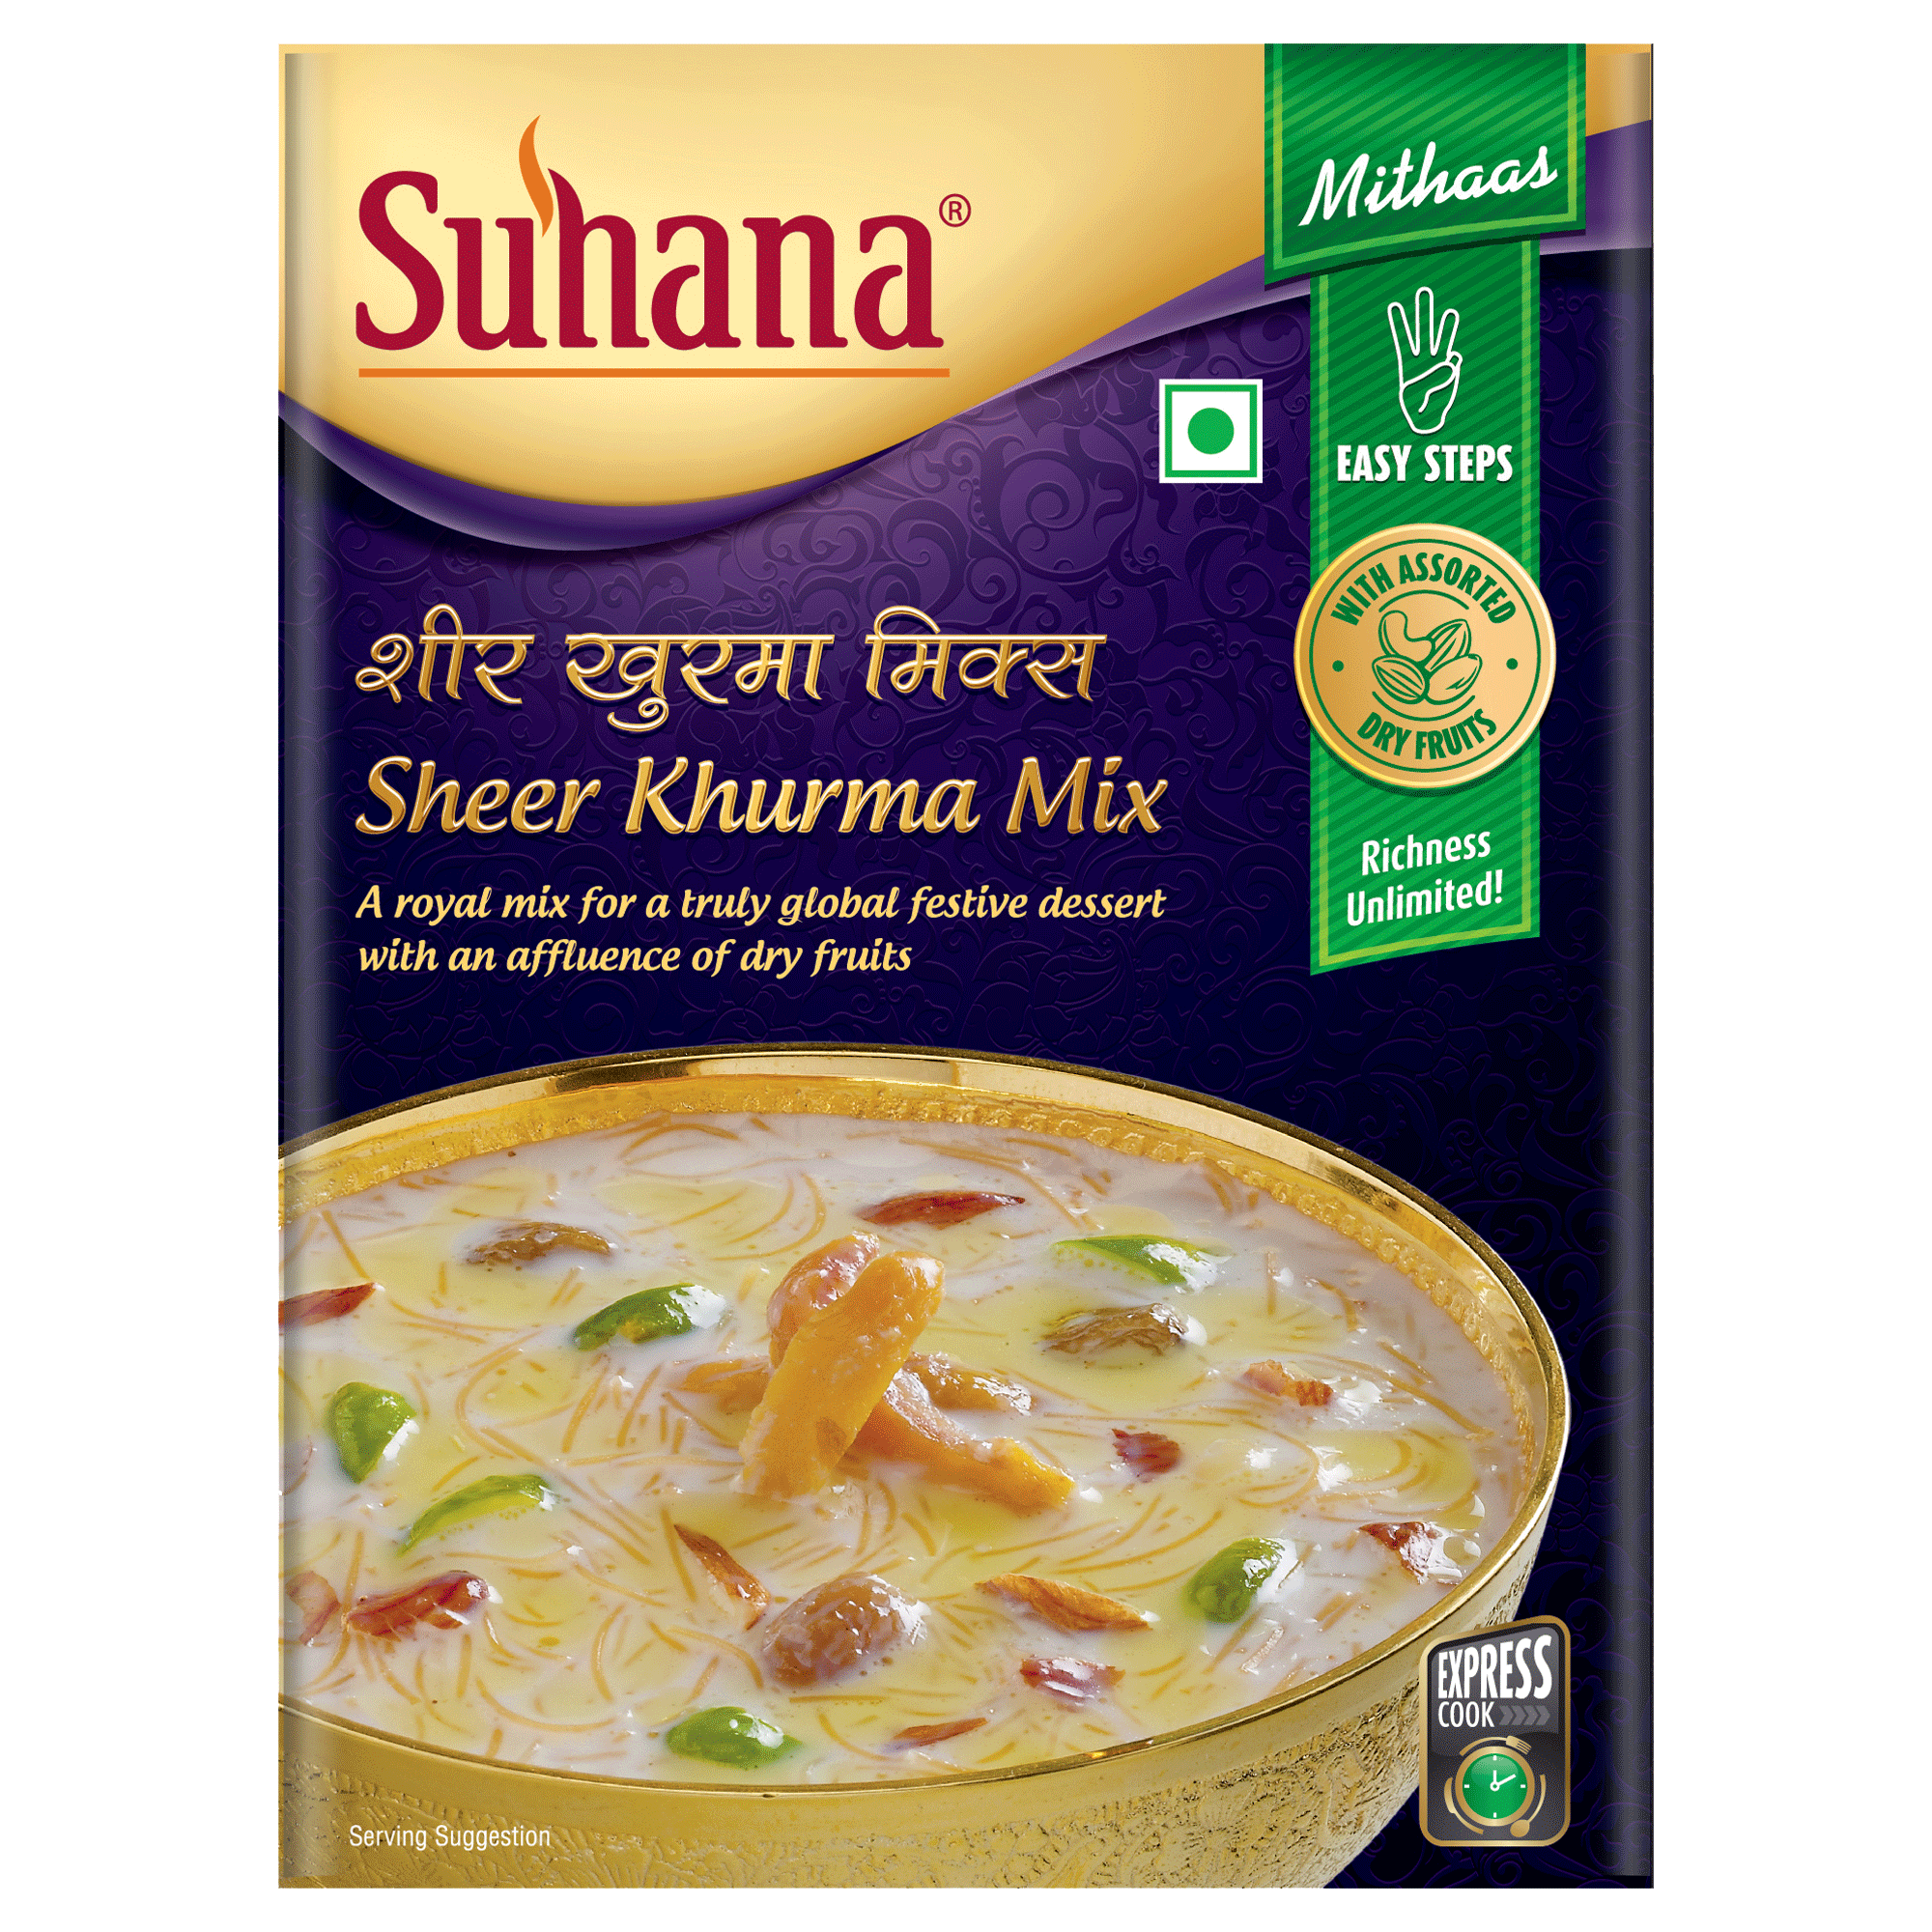 Suhana Instant Sheer Khurma Mix 150g Box